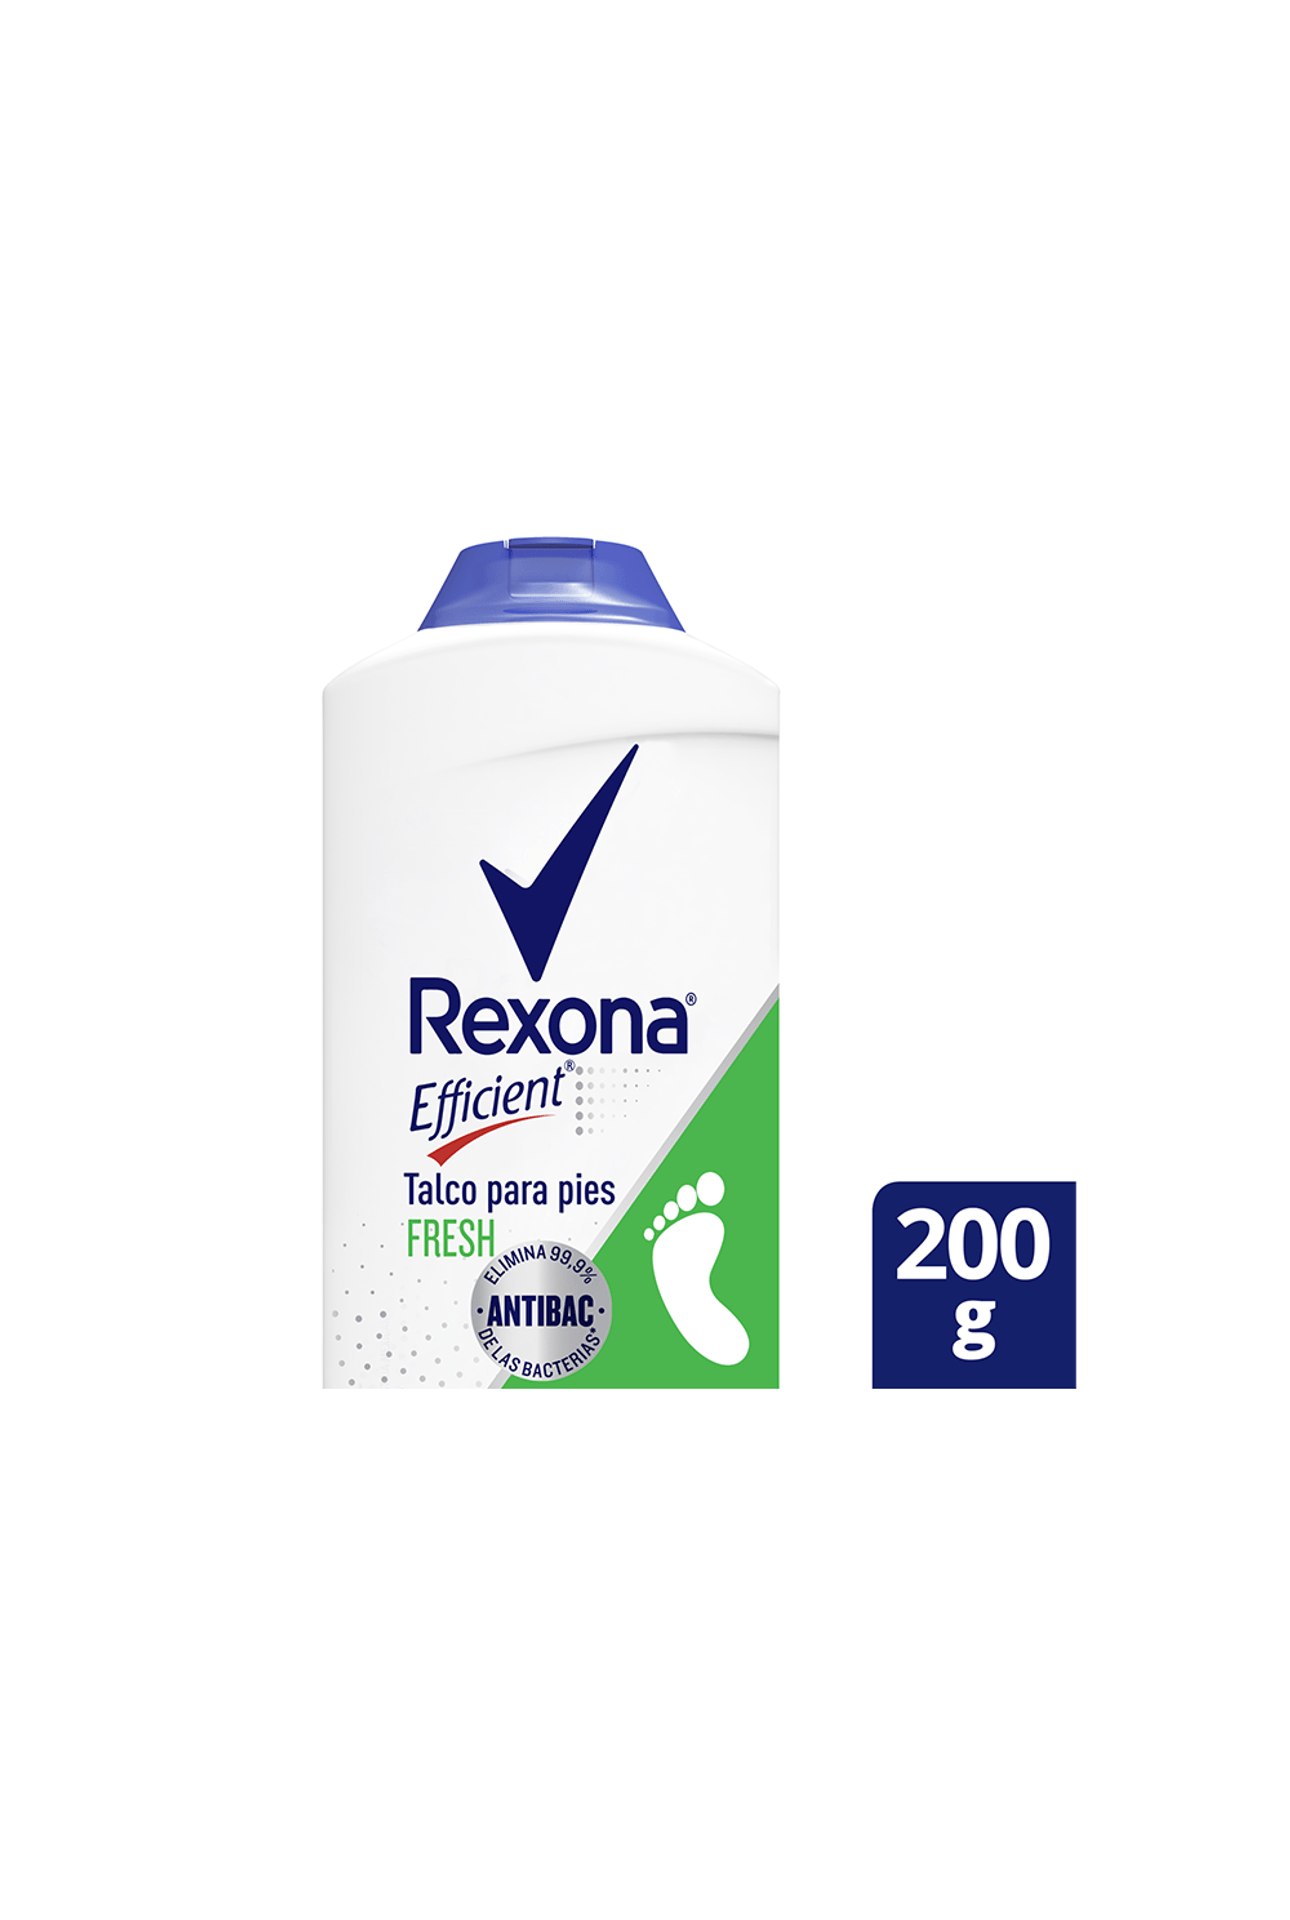 Rexona Efficient Fresh Desodorante para Pies en Aerosol x 153 Ml